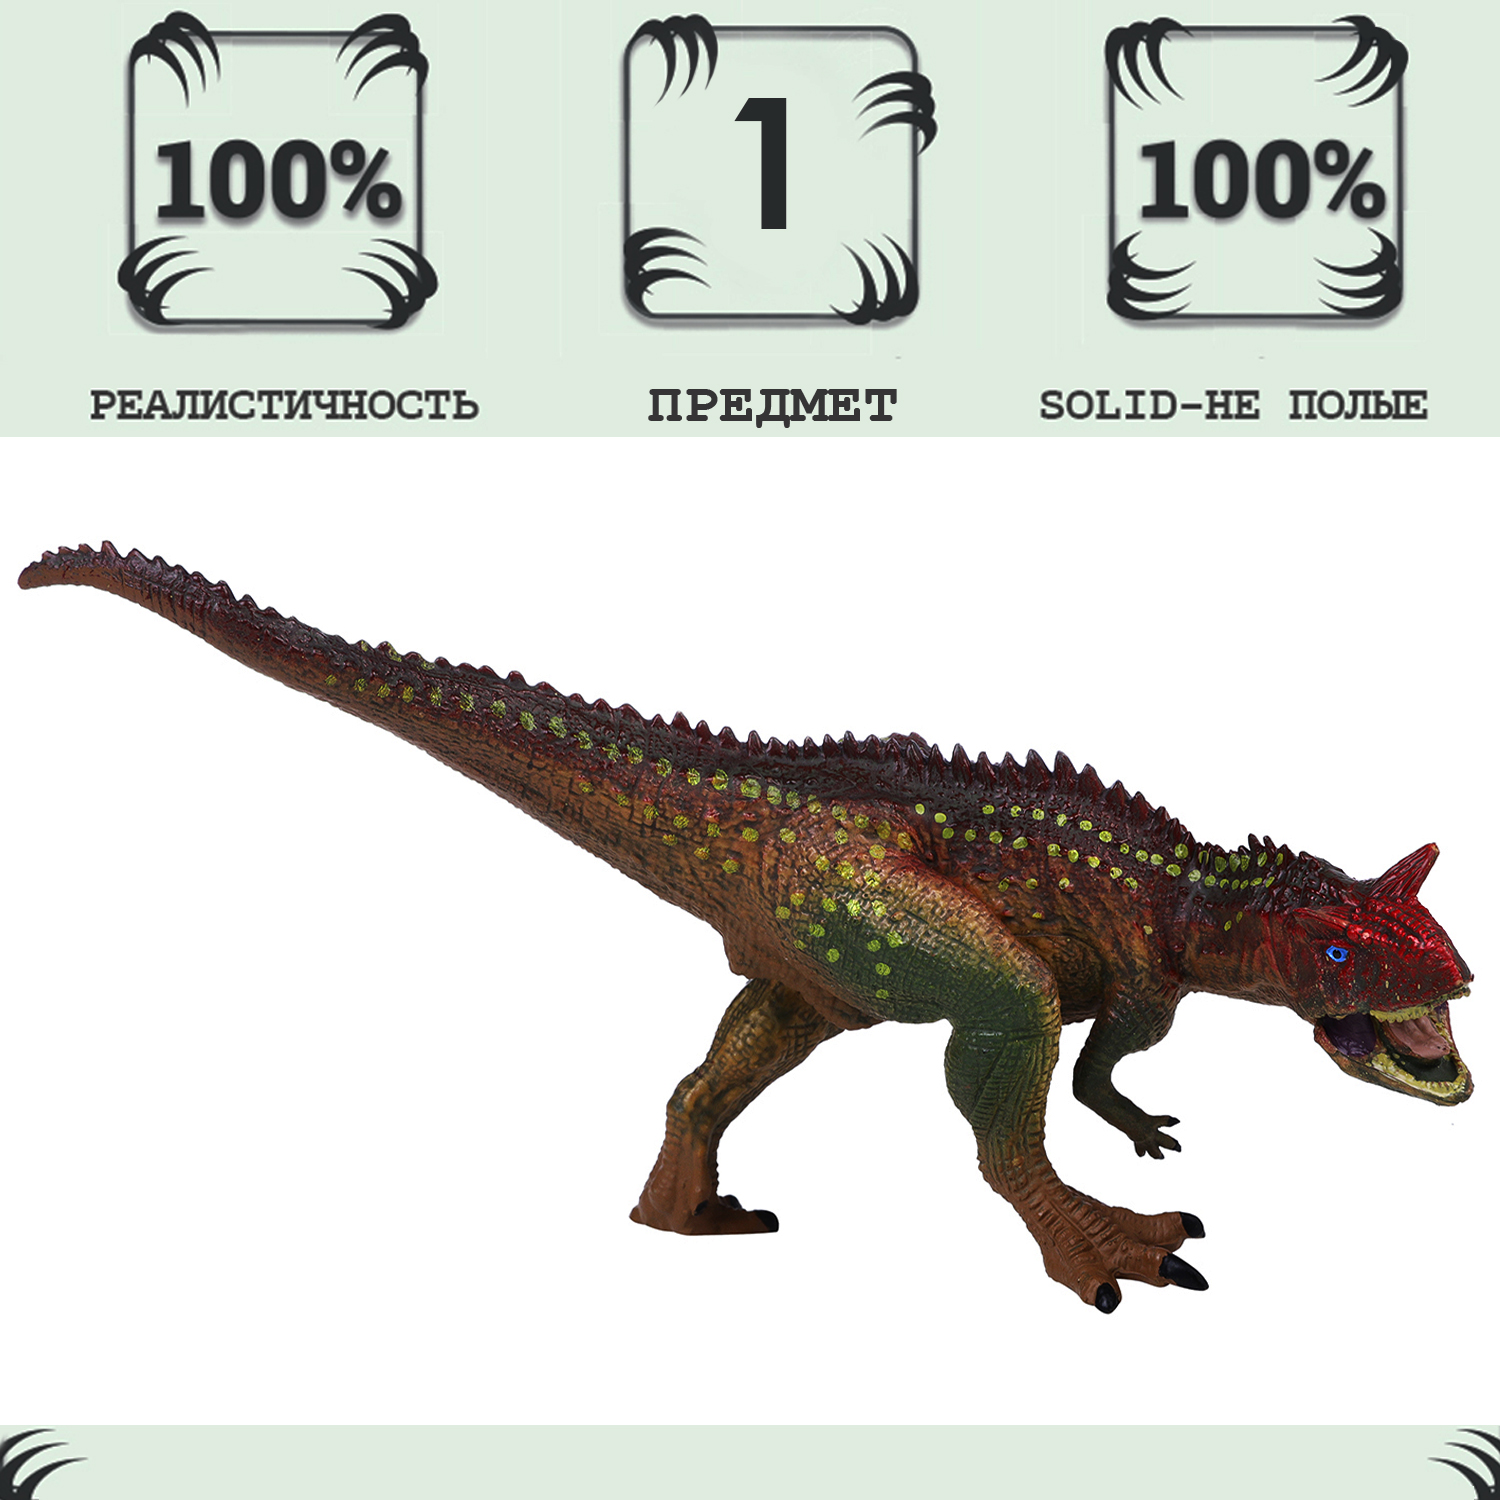 Фигурка Masai Mara динозавр серии Мир динозавров Карнотавр MM216-038 интерактивная игрушка kiddieplay фигурки динозавра пахицелафозавр и карнотавр